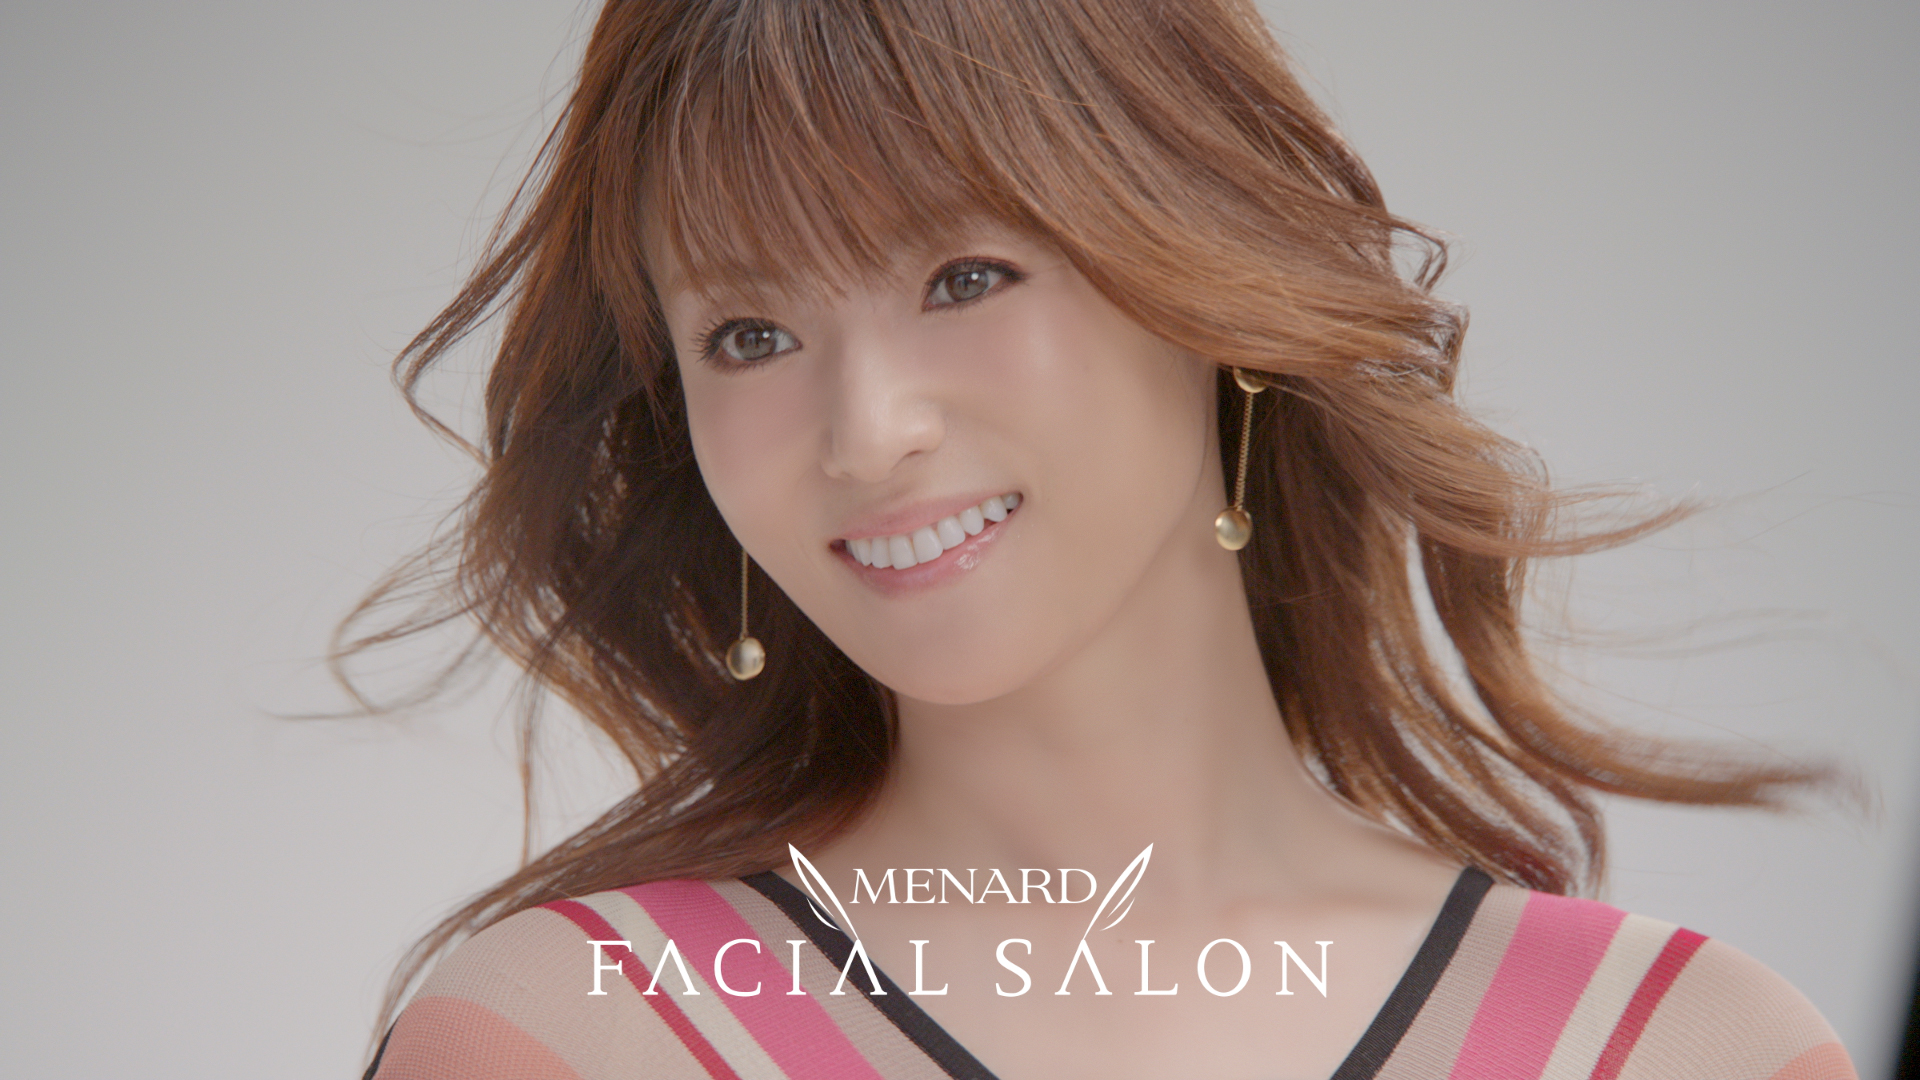 Menard Facial Salon 新tv ｃm放映 ウェブ限定のスペシャルムービーも公開 日本メナード化粧品株式会社 日本メナード化粧品株式会社のプレスリリース